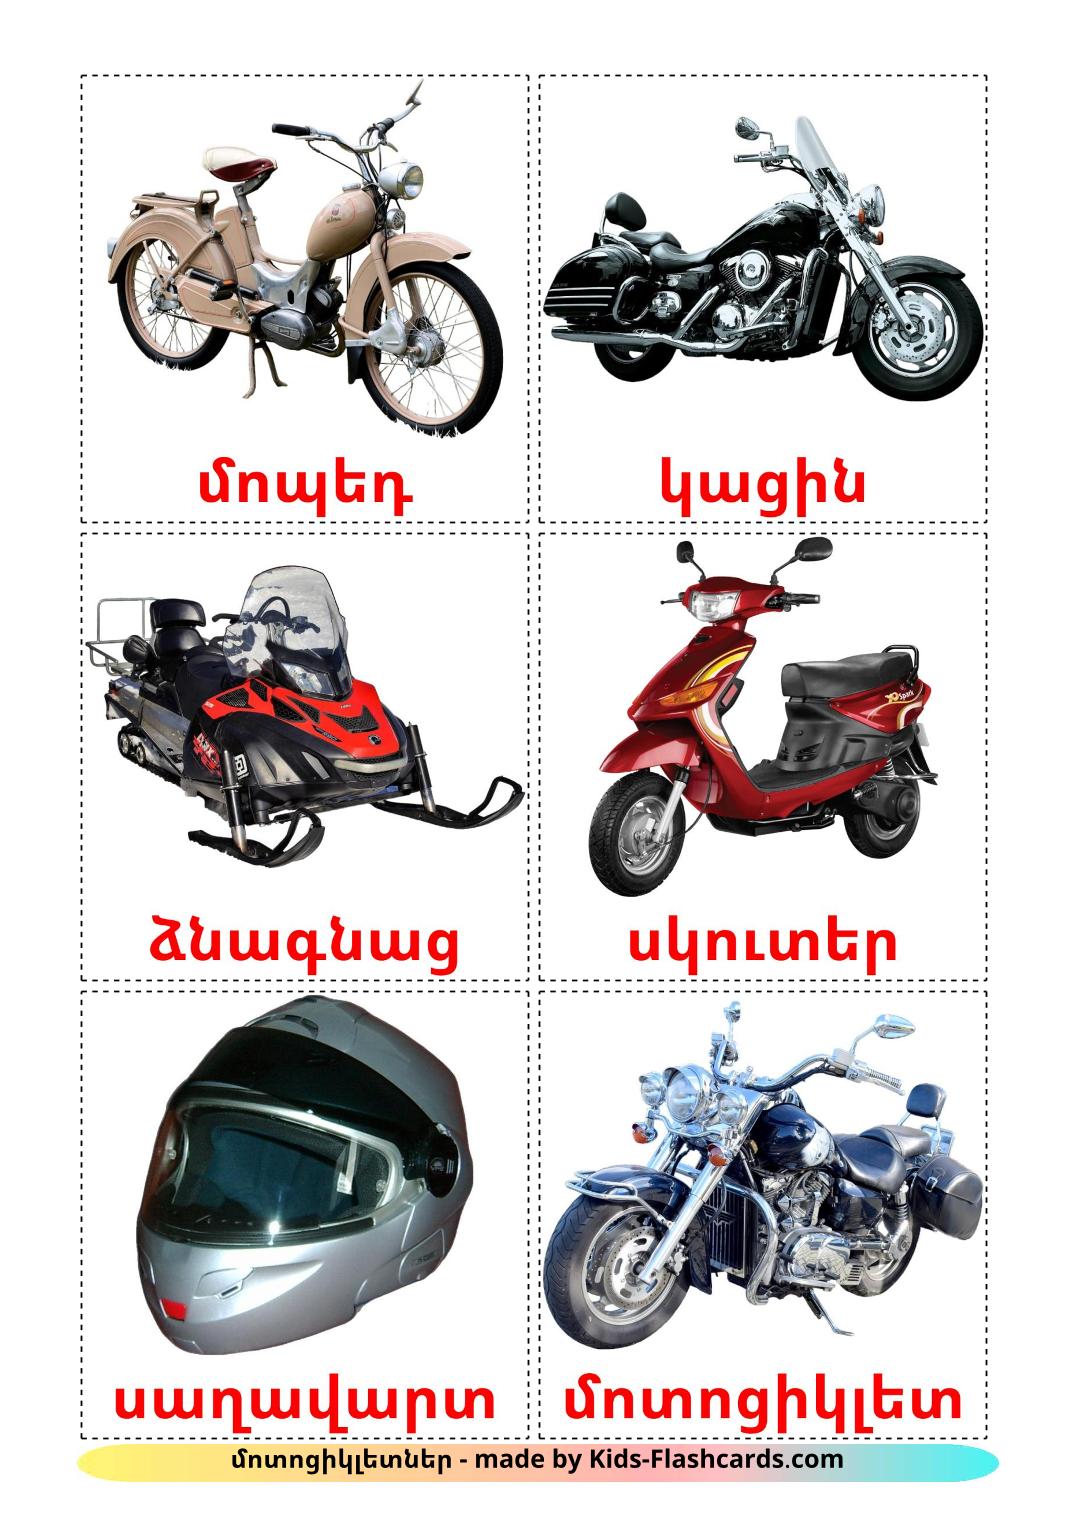 Motocicletas - 12 fichas de armenio para imprimir gratis 